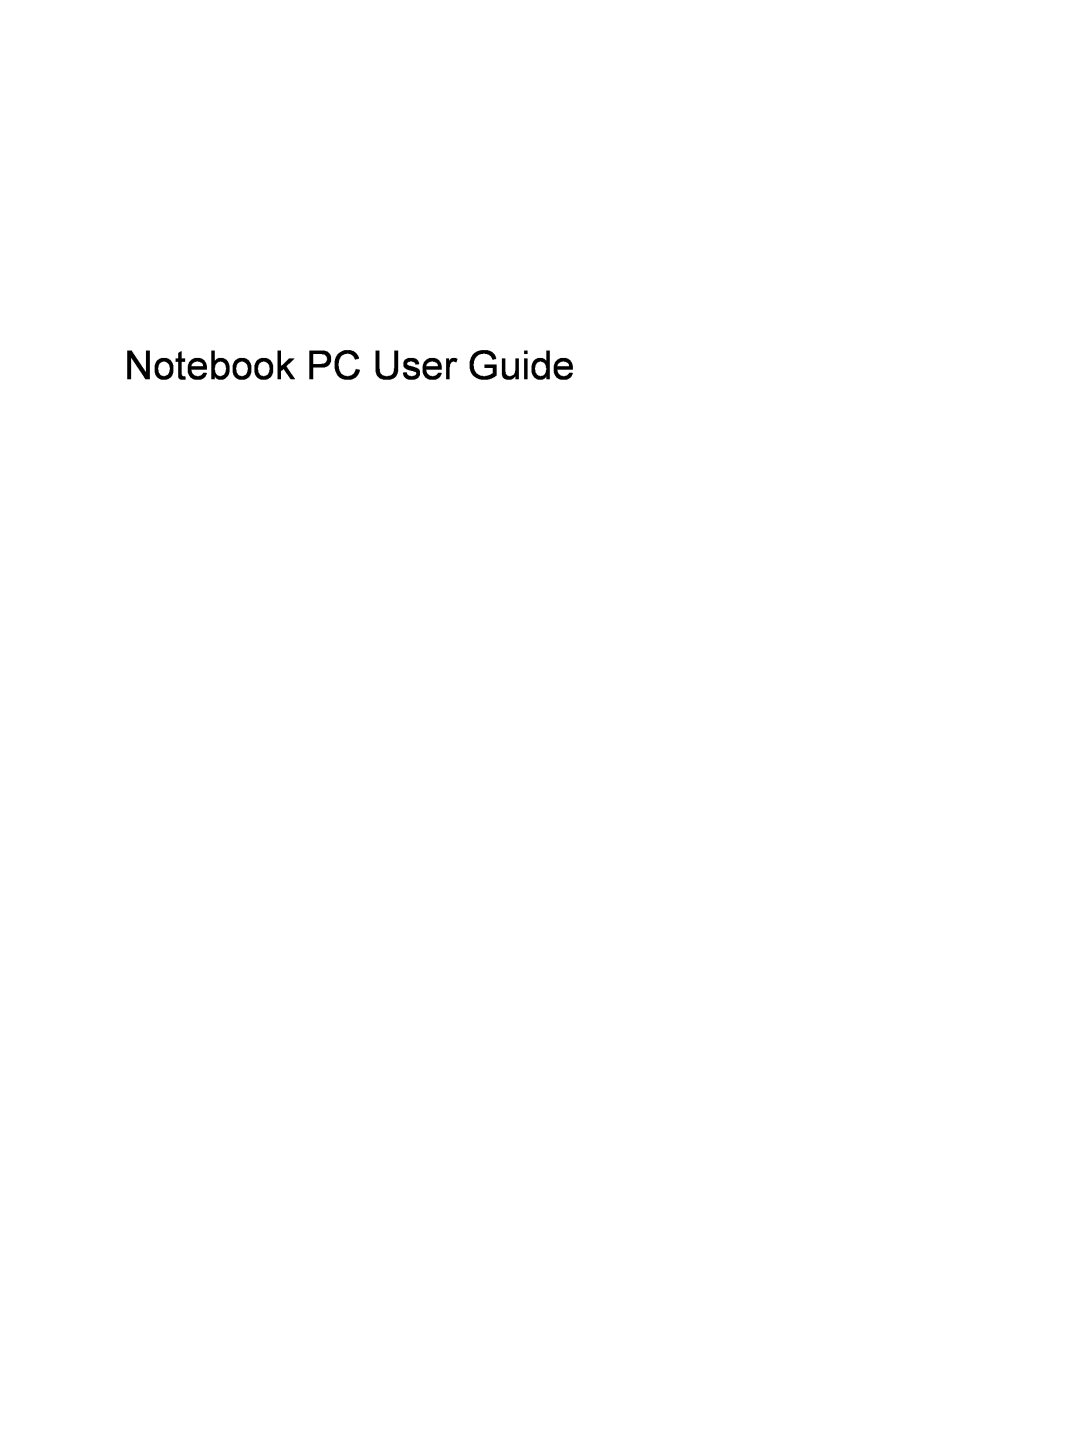 HP dv4-2160us manual Notebook PC User Guide 